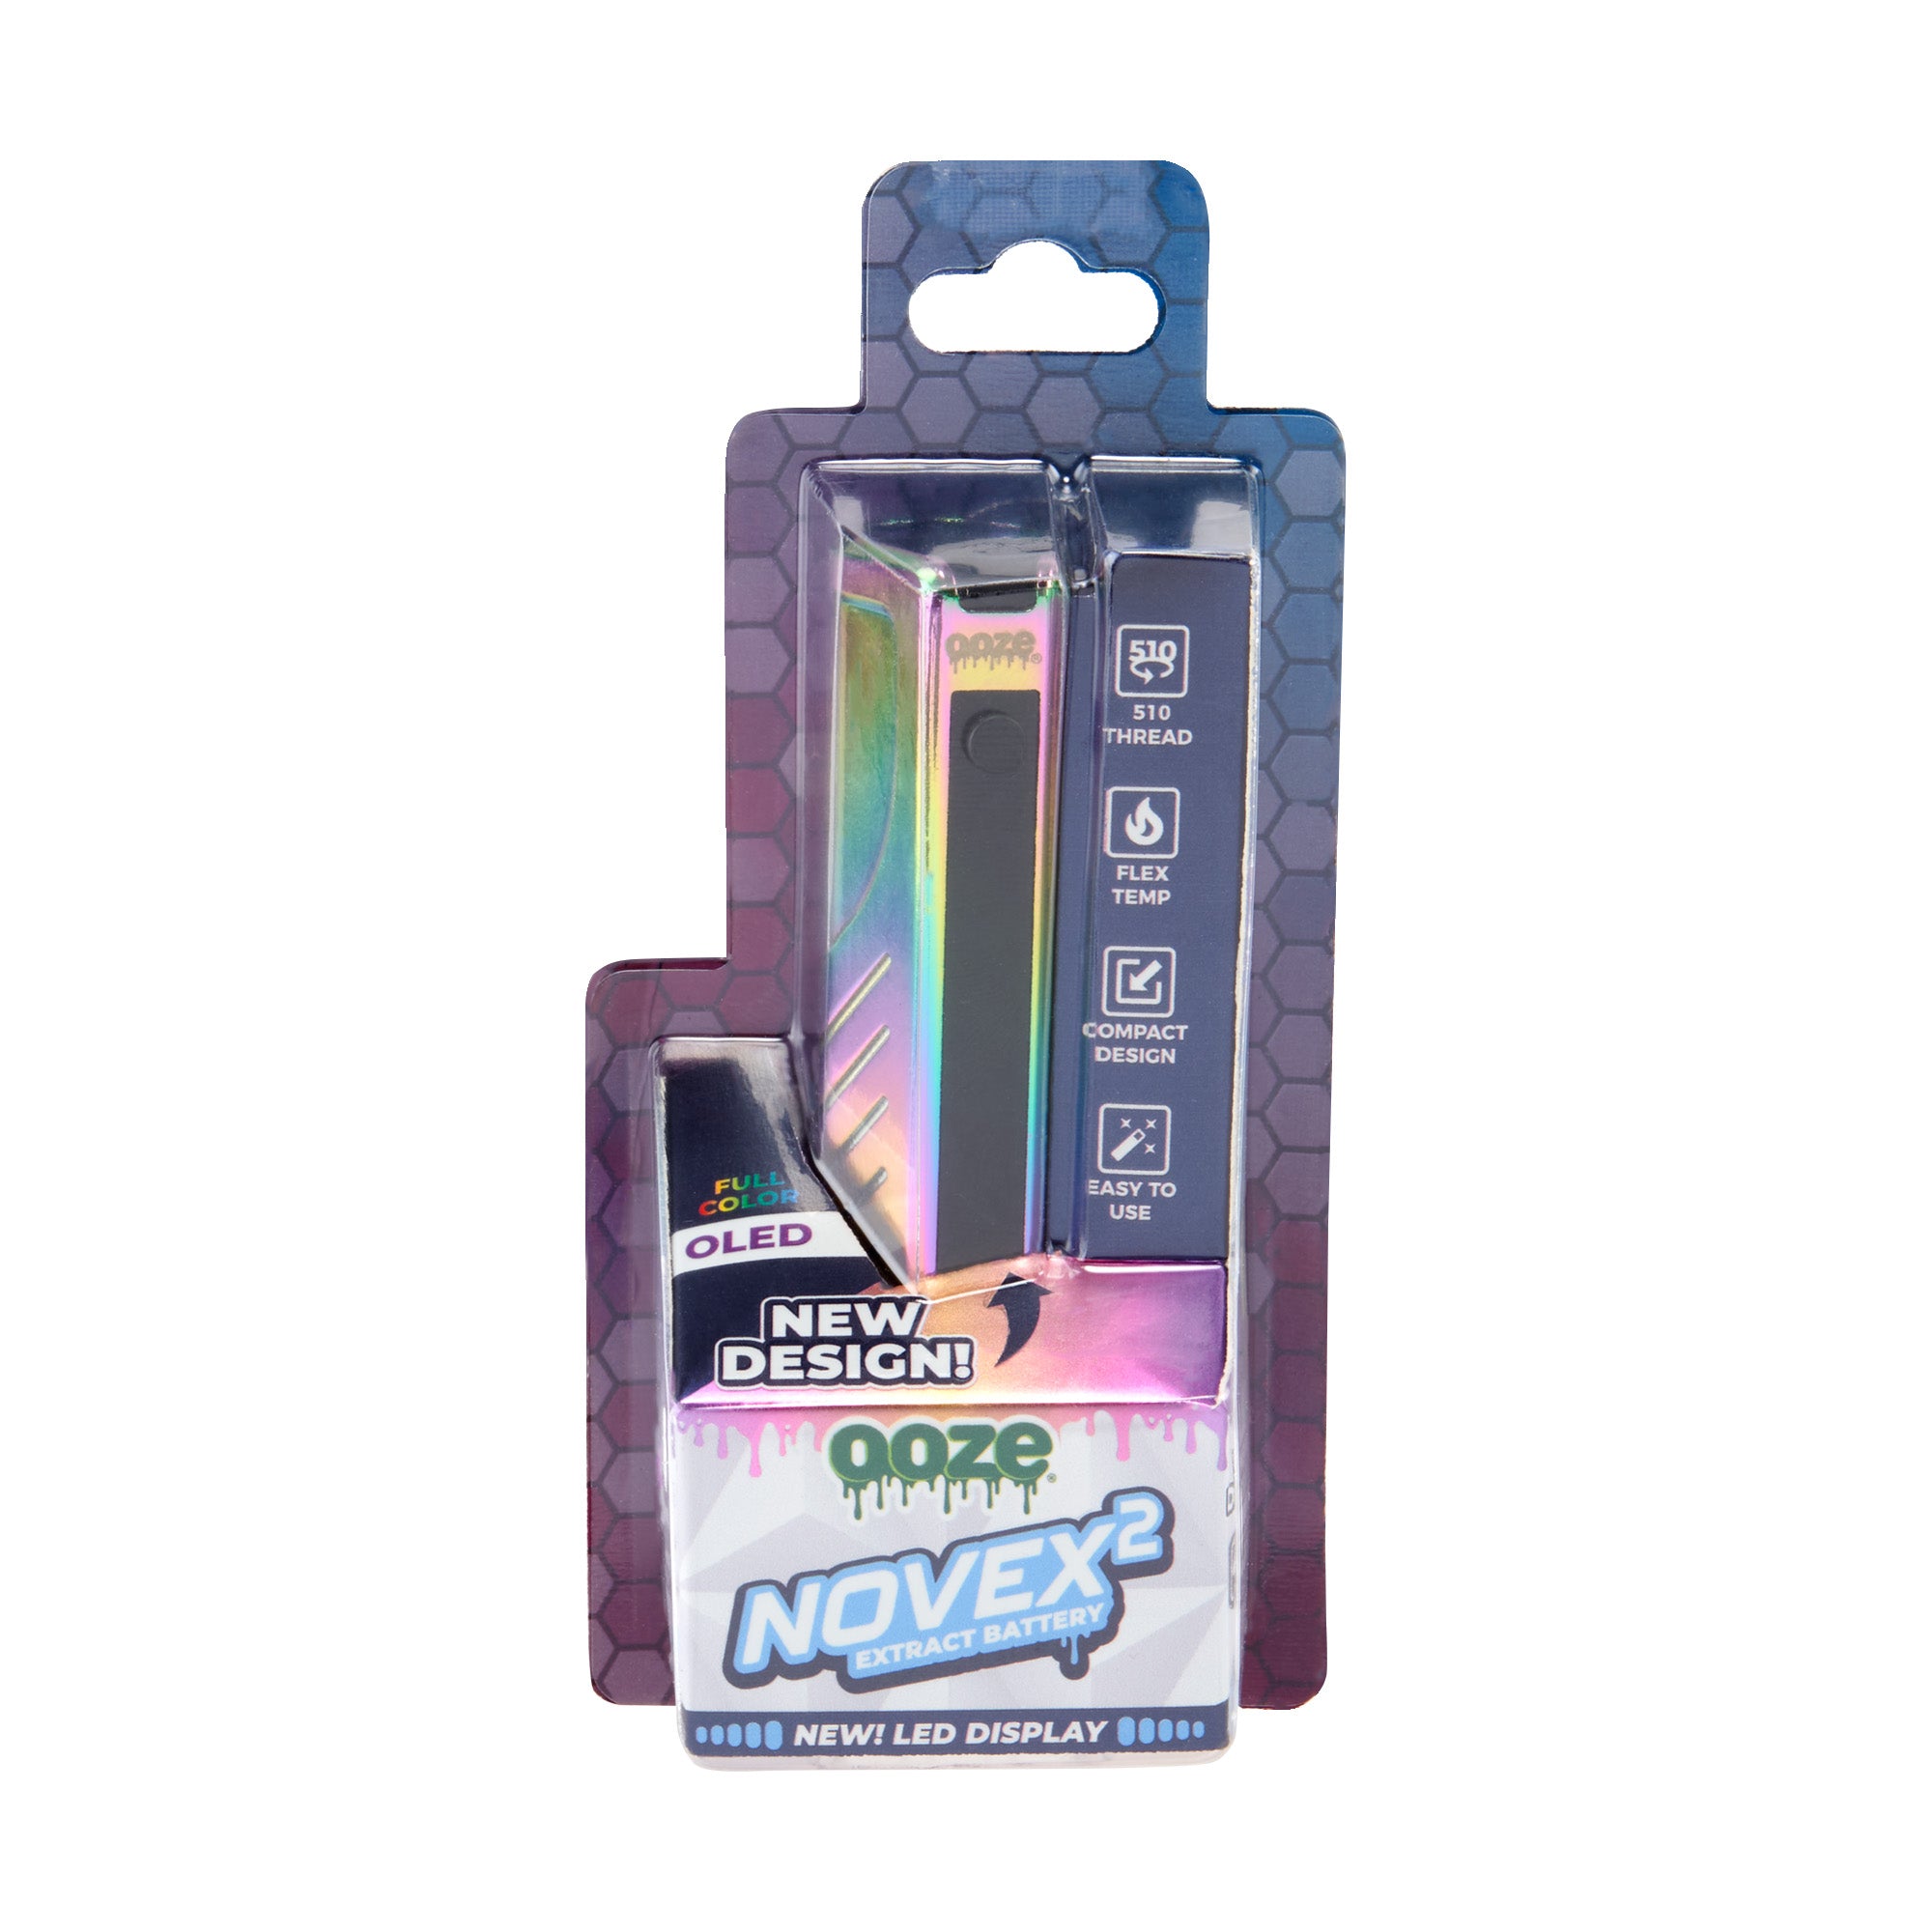 Ooze Novex 2 – 400 mAh Vape with Digital Screen - Rainbow